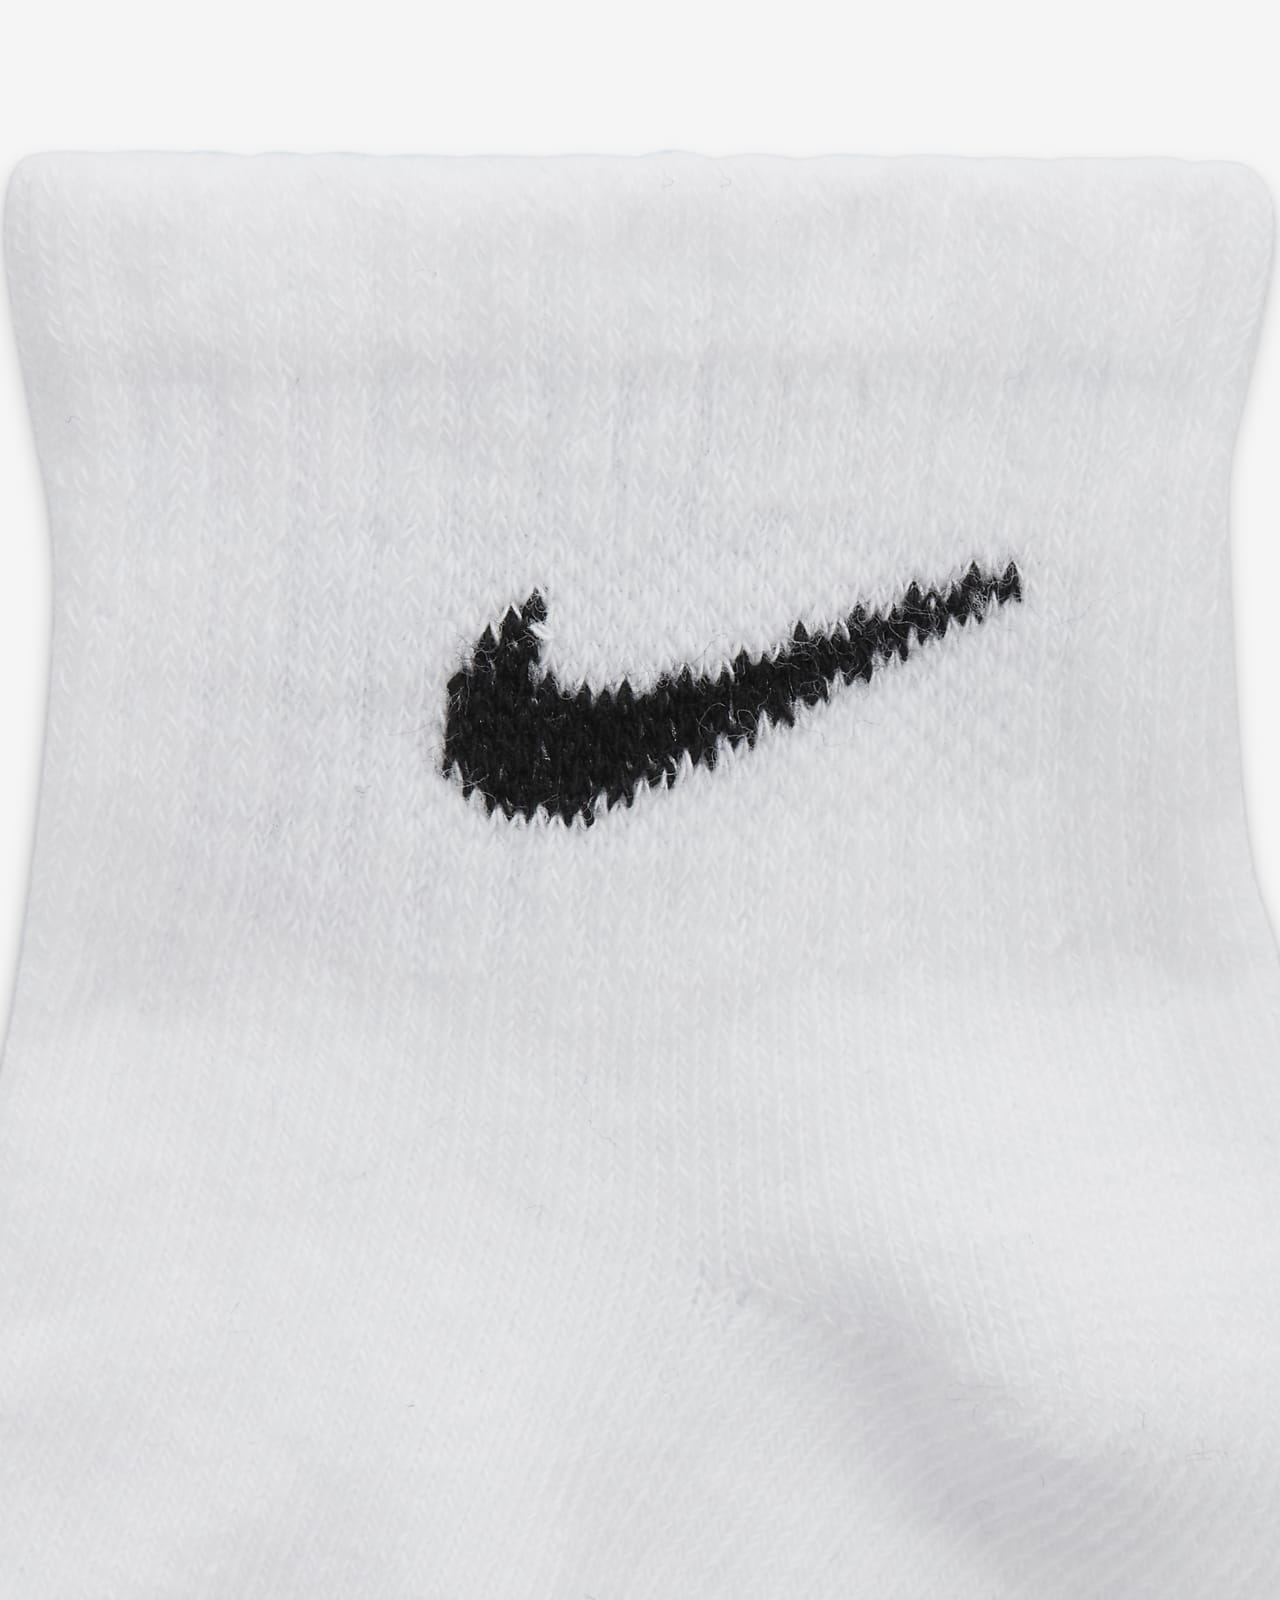 Nike Baby (6-12M) Gripper Ankle Socks (3 Pairs). Nike.com